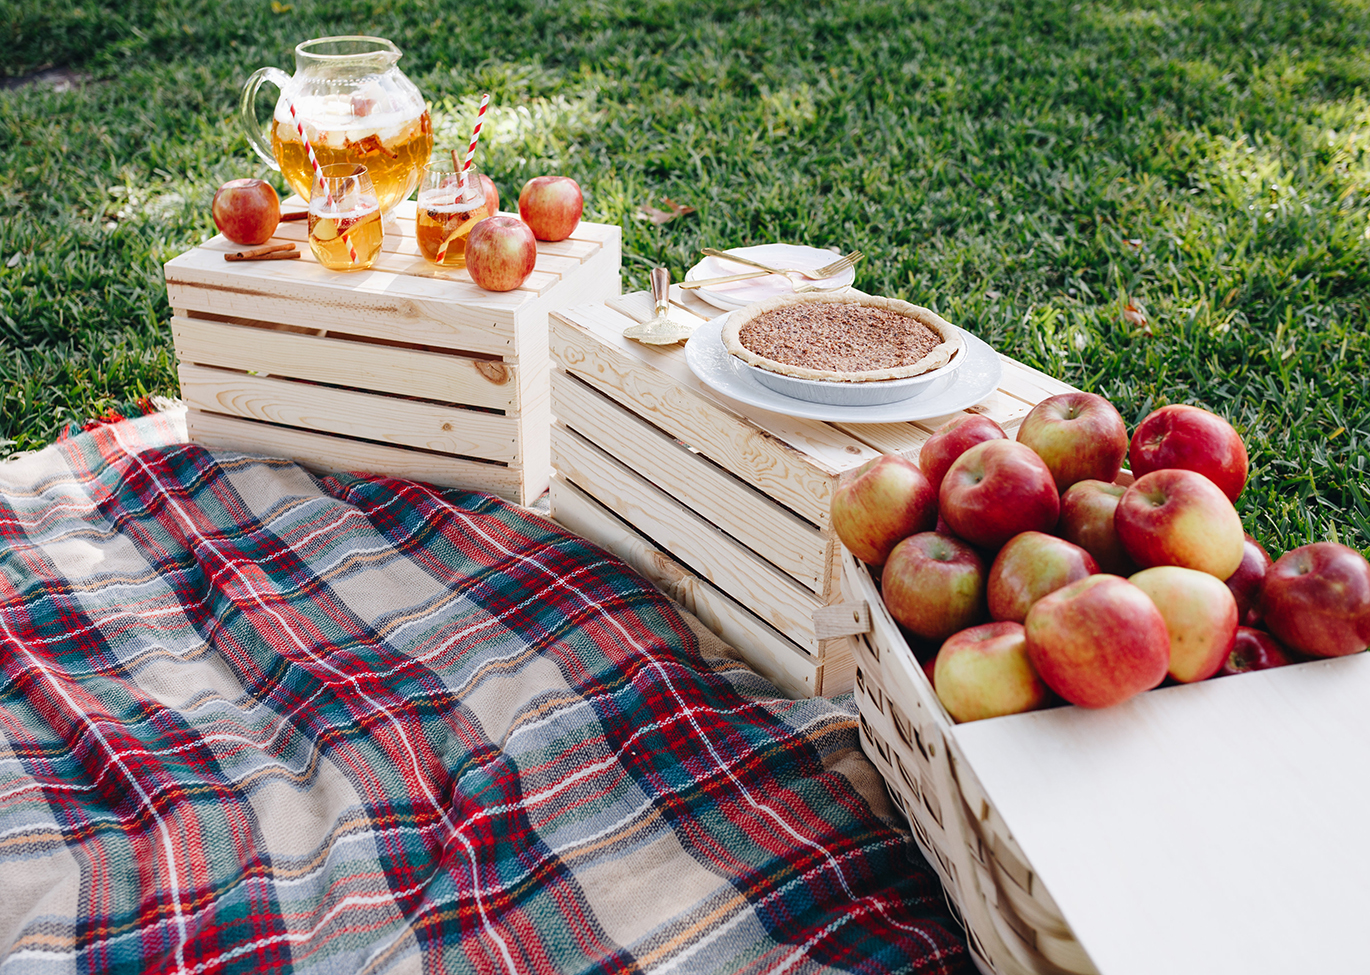 Fall picnic ideas